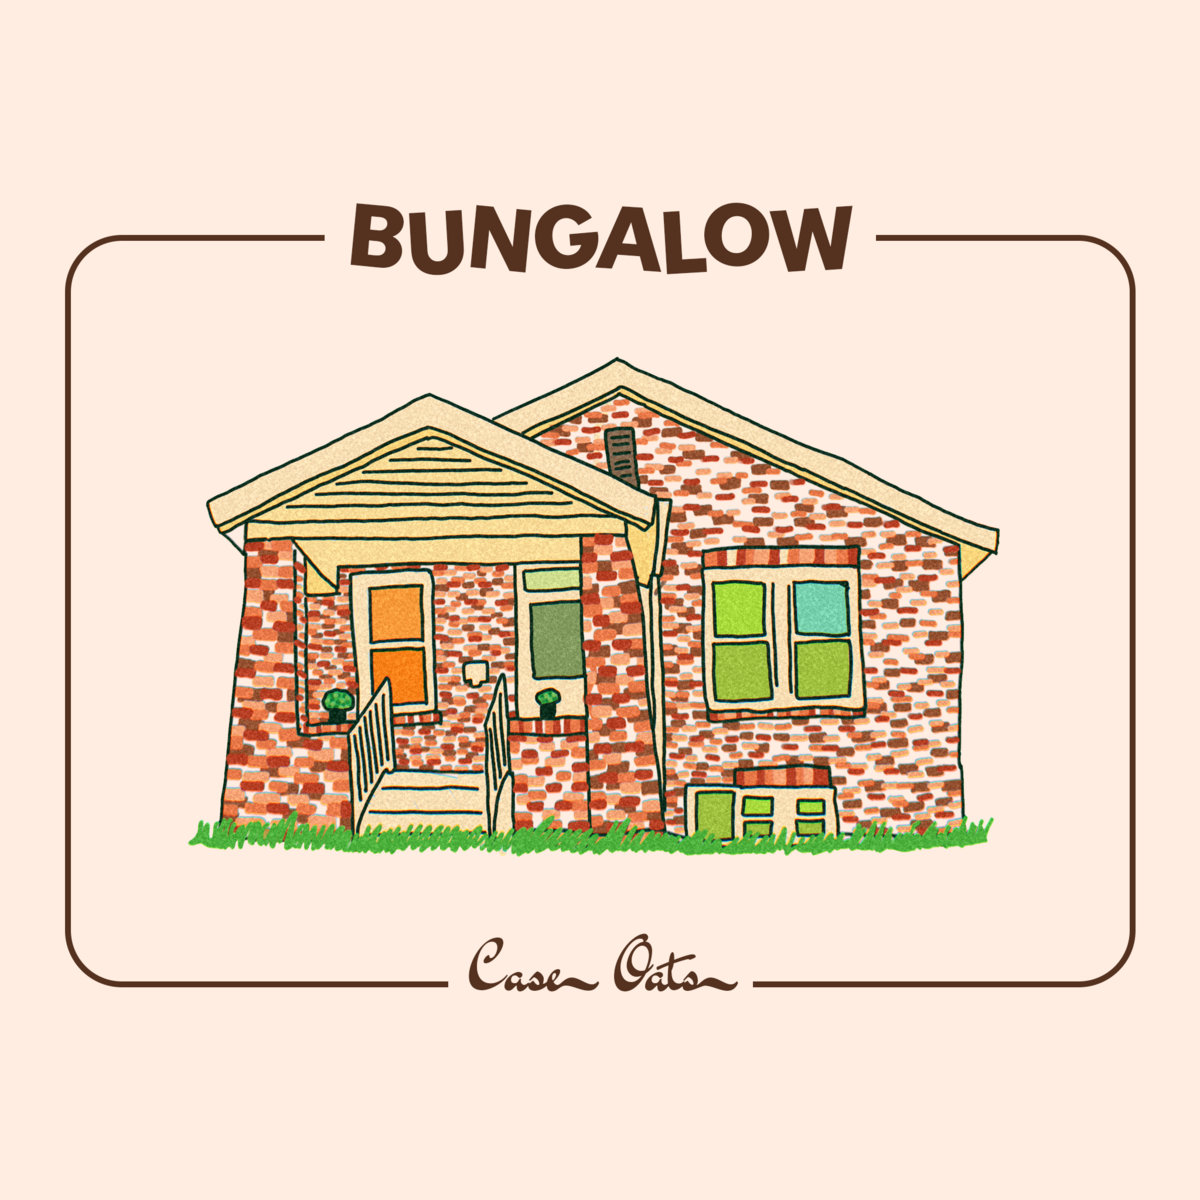 Bungalow artwork